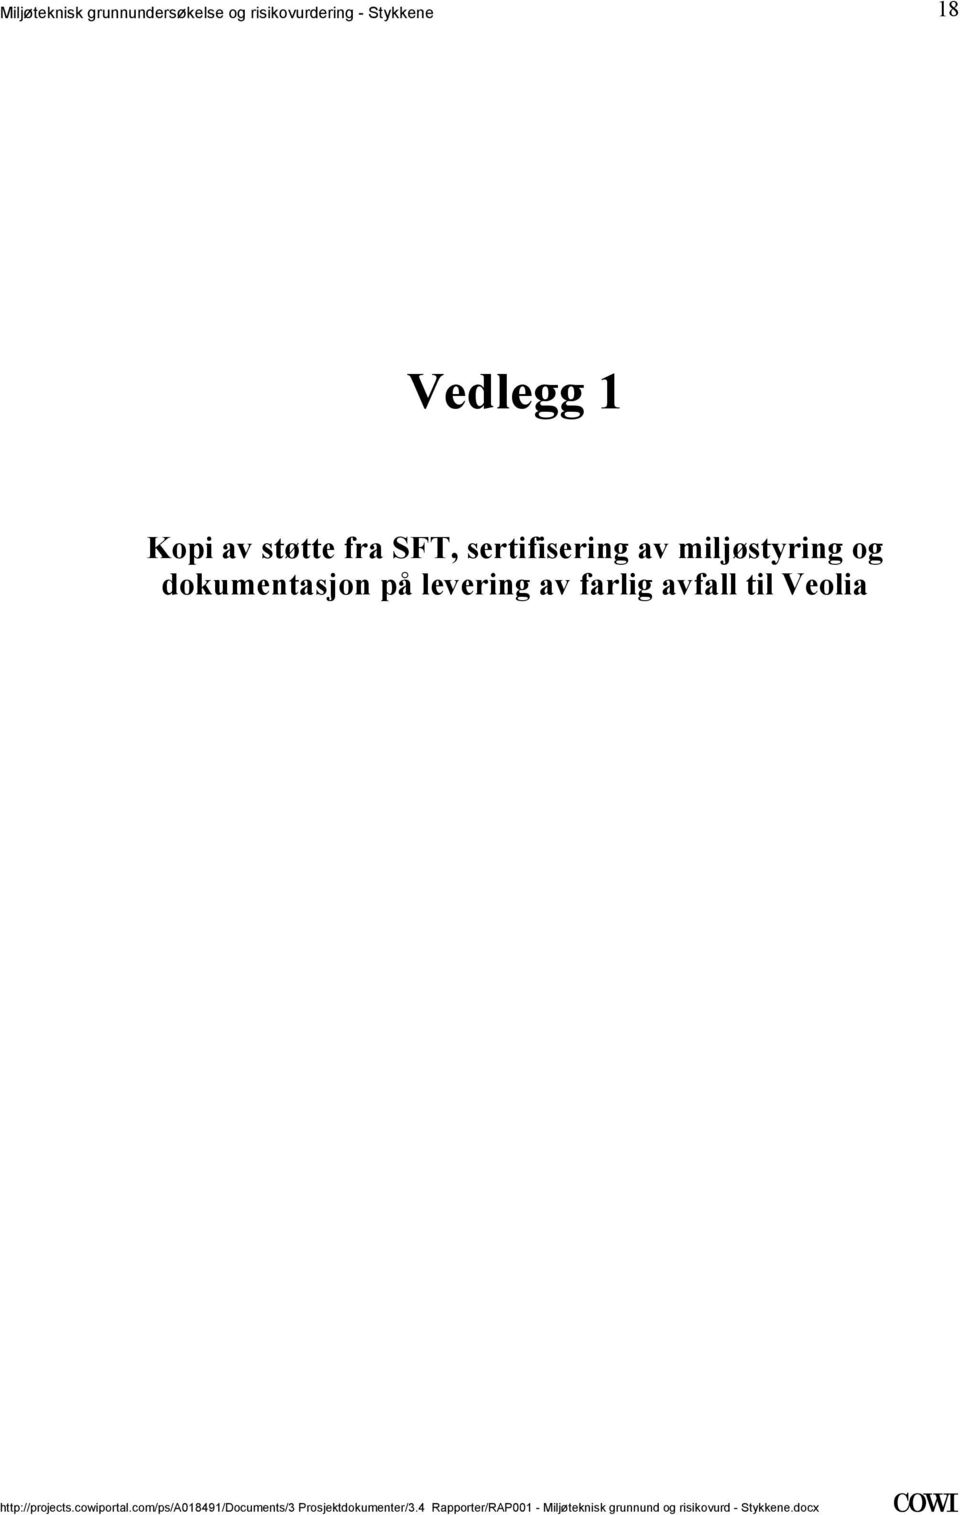 farlig avfall til Veolia http://projects.cowiportal.